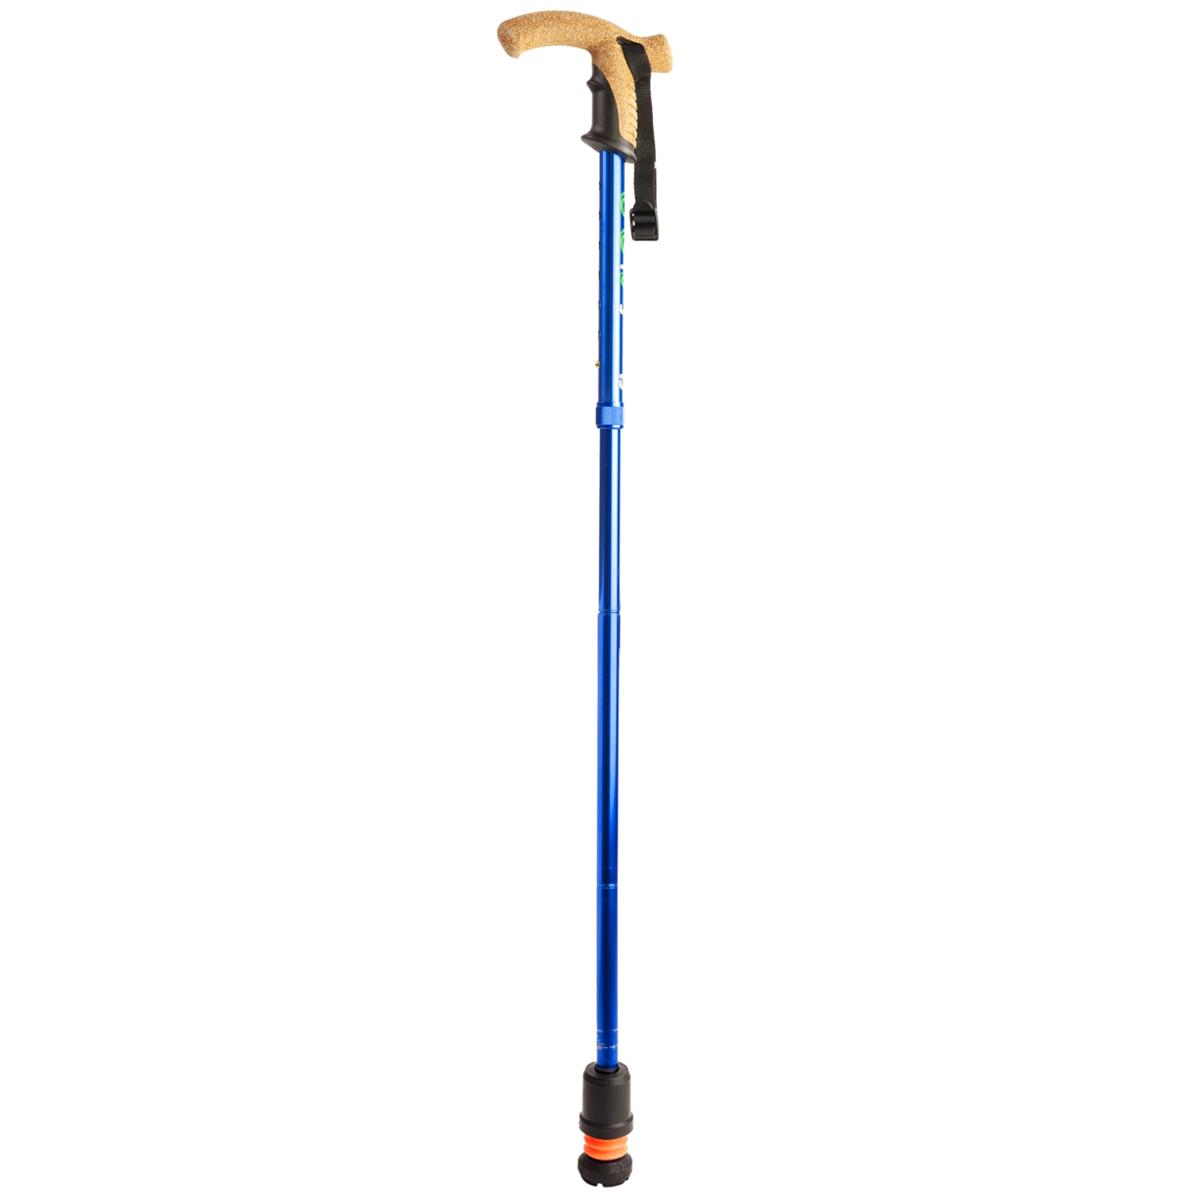 A single blue Flexyfoot Premium Cork Handle Folding Walking Stick